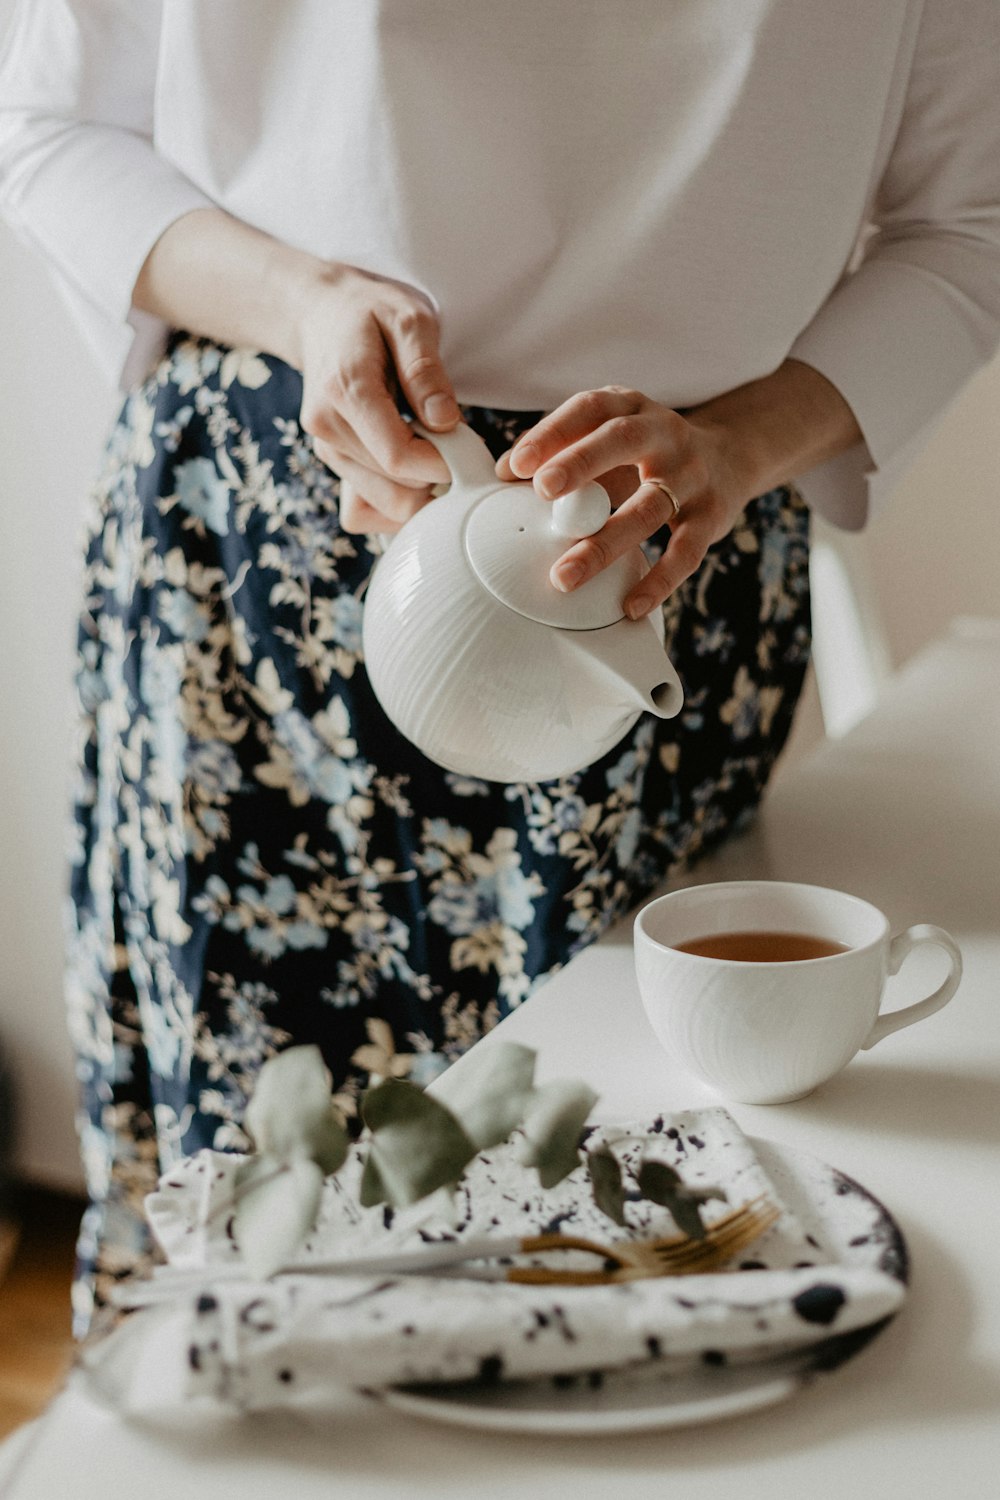 woman holding teapot pouring on coffee mug on table